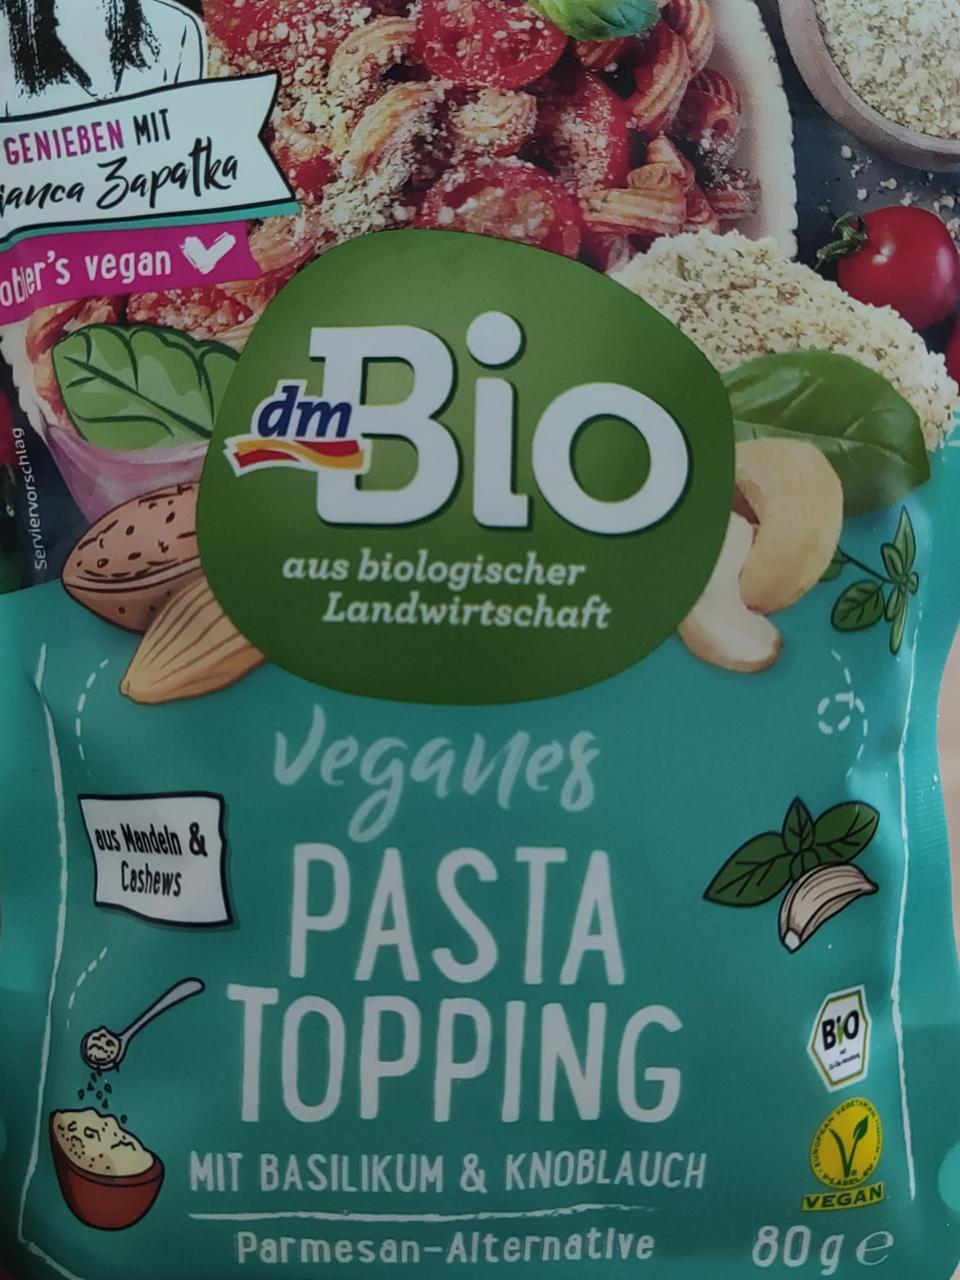 Fotografie - Veganes pasta topping mit basilikum & Knoblauch dmBio